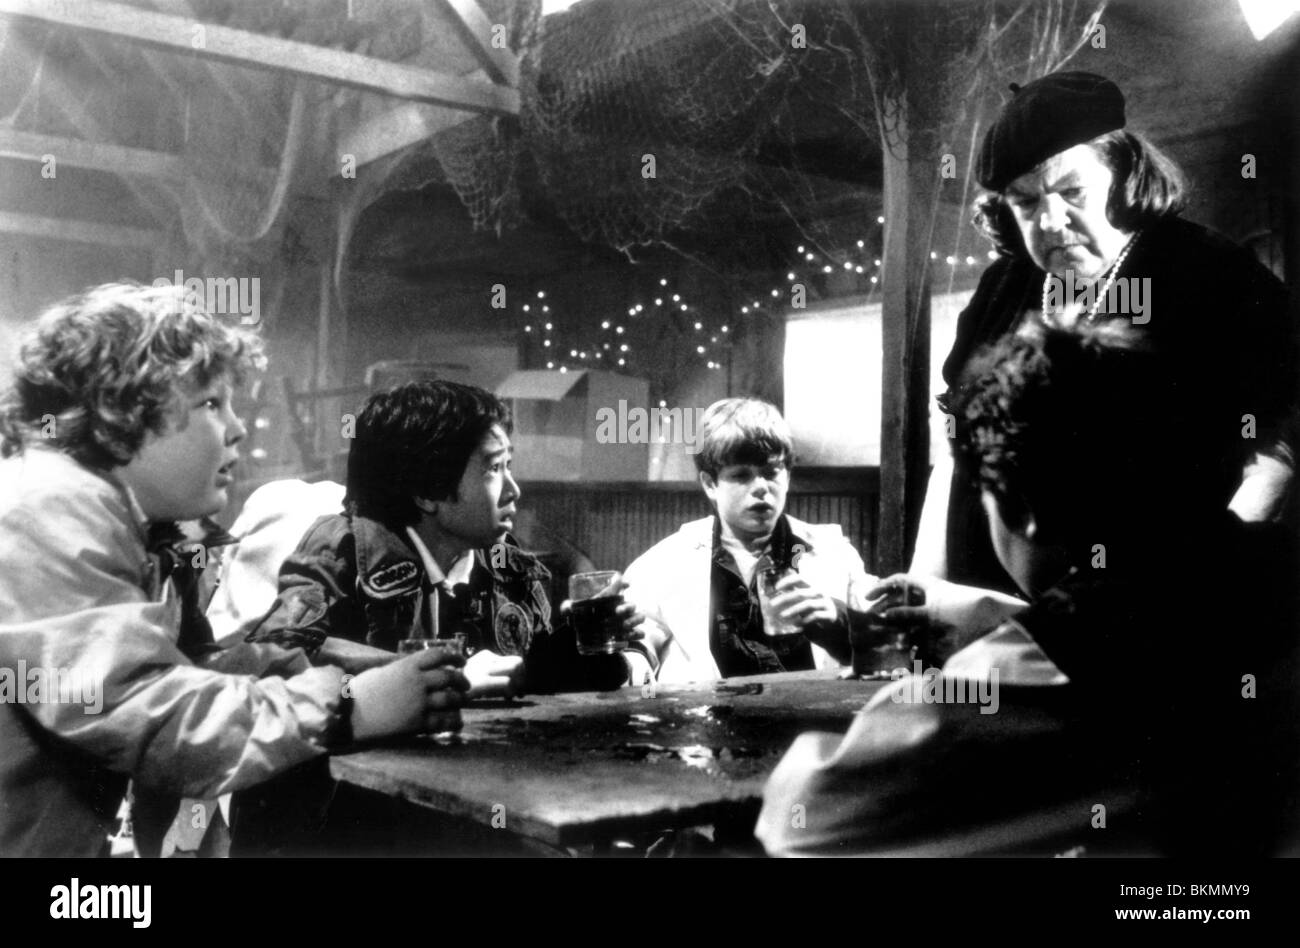 THE GOONIES (1985) JEFF COHEN, KE HUY QUAN, SEAN ASTIN, ANNE RAMSEY, COREY FELDMAN GOO 001P Stock Photo